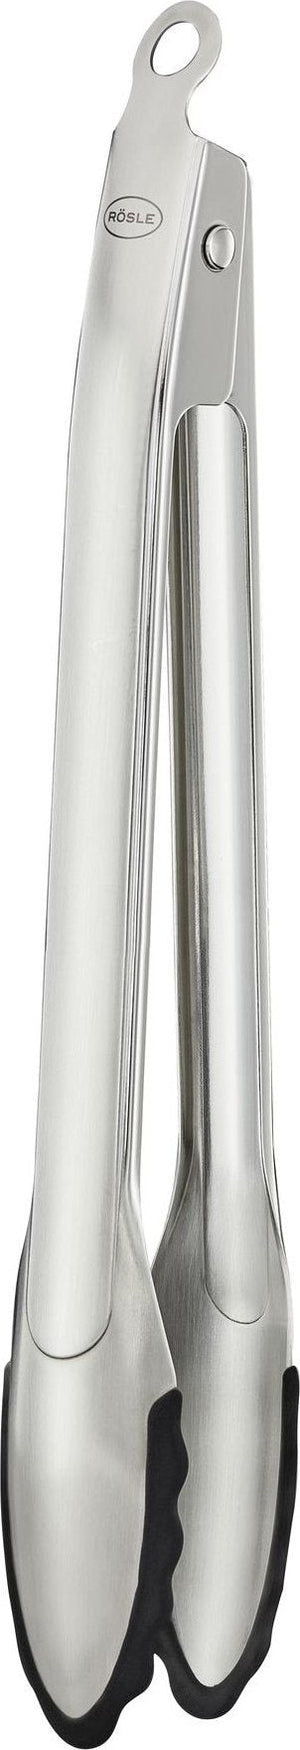 Rosle - 9.1" Locking Tongs with Silicone Edges (23 cm) - 12985